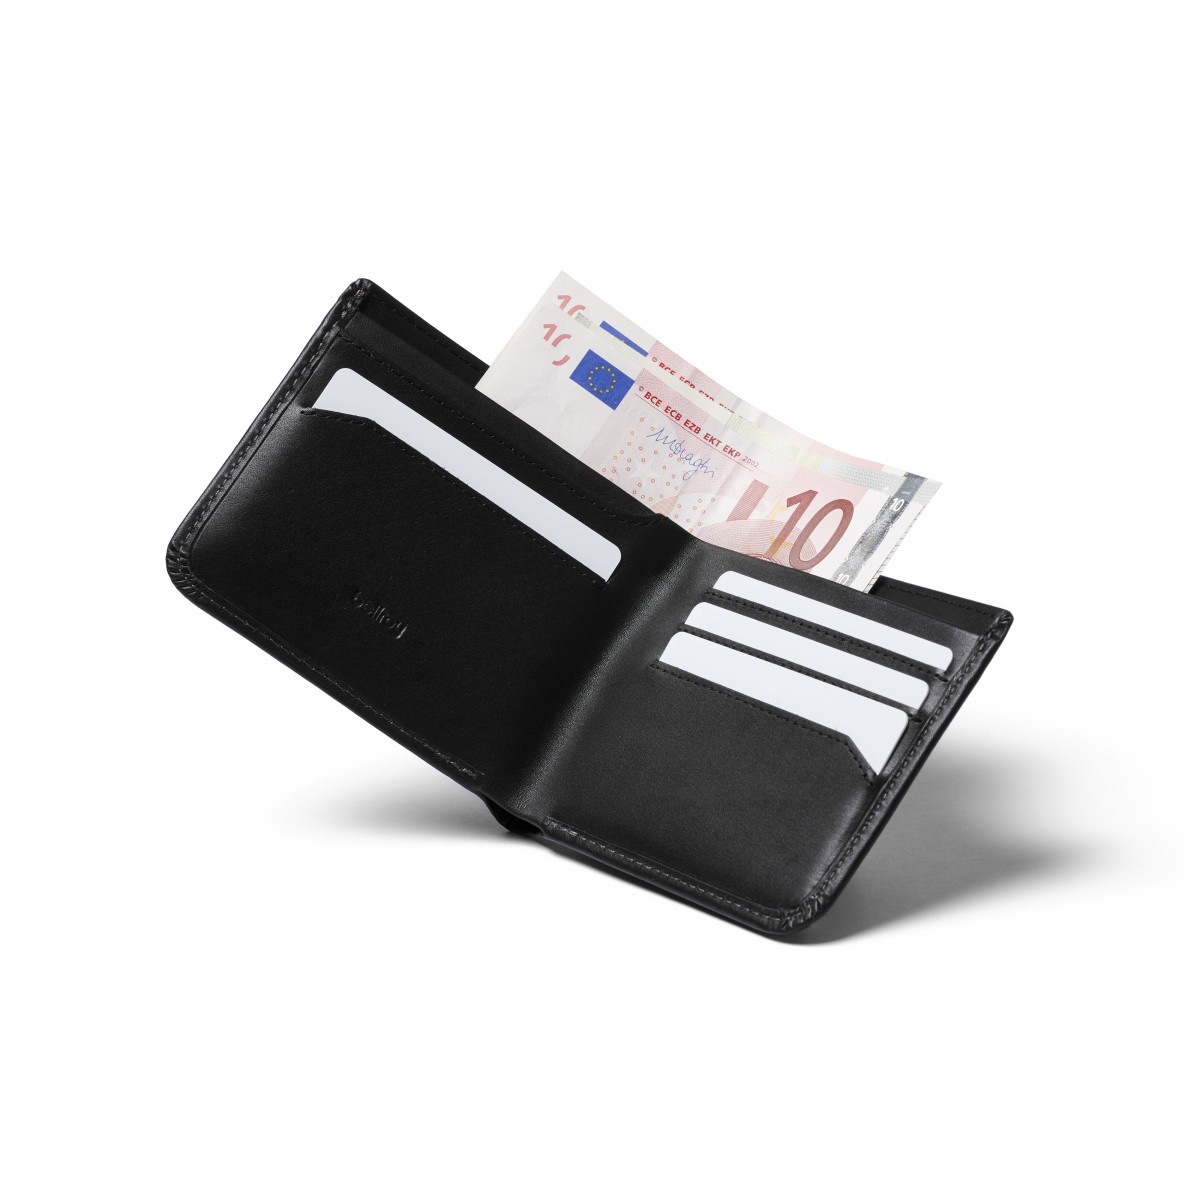 The quality of the Bellroy Bags & EDC Hide & Seek Wallet - RFID is